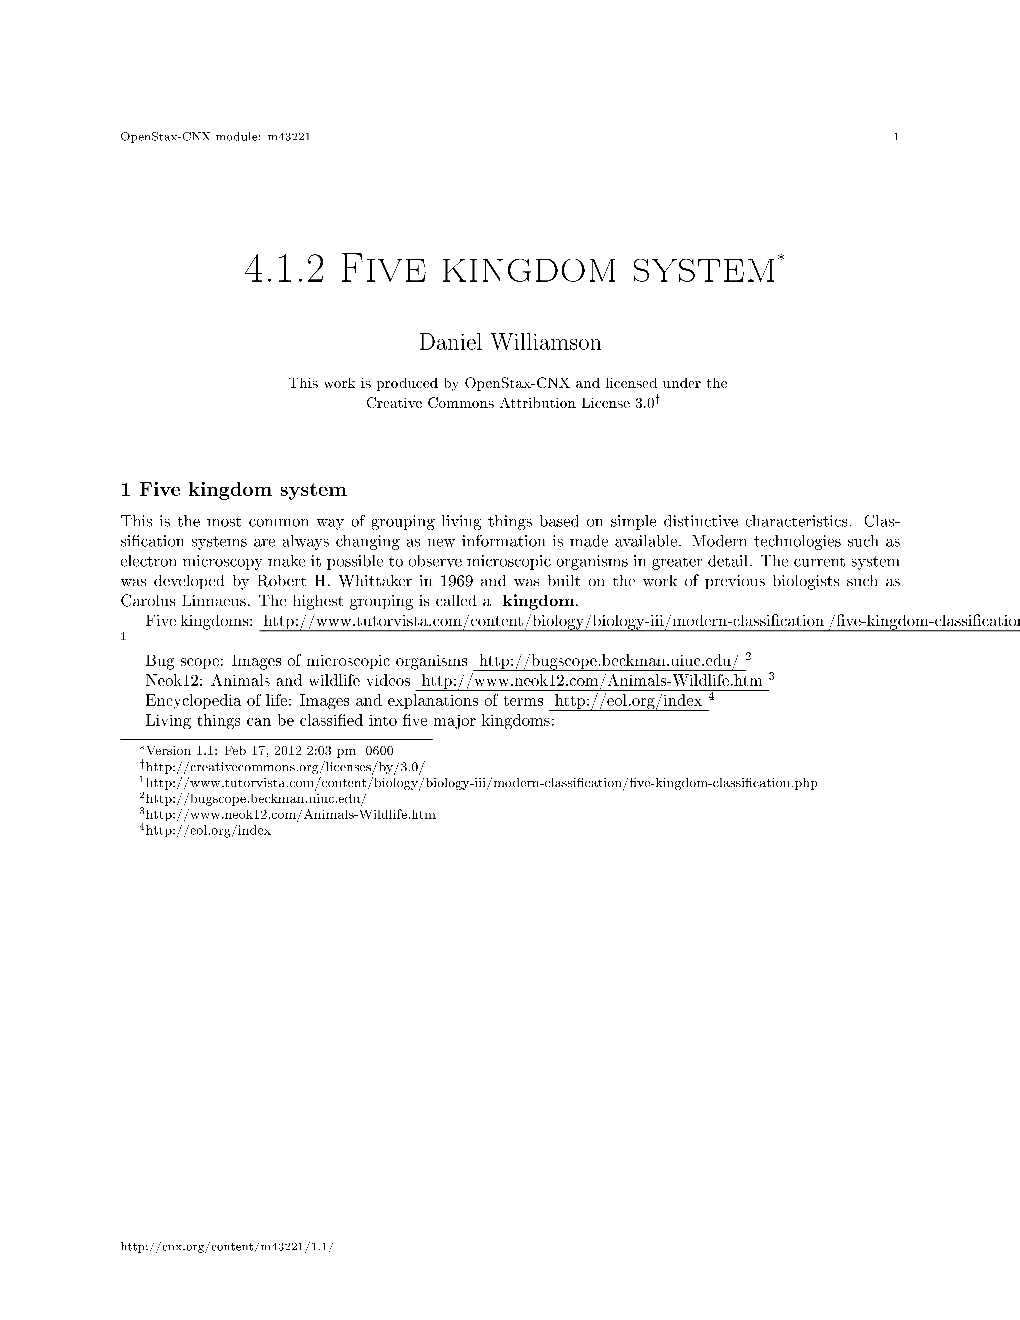 4.1.2 Five Kingdom System*